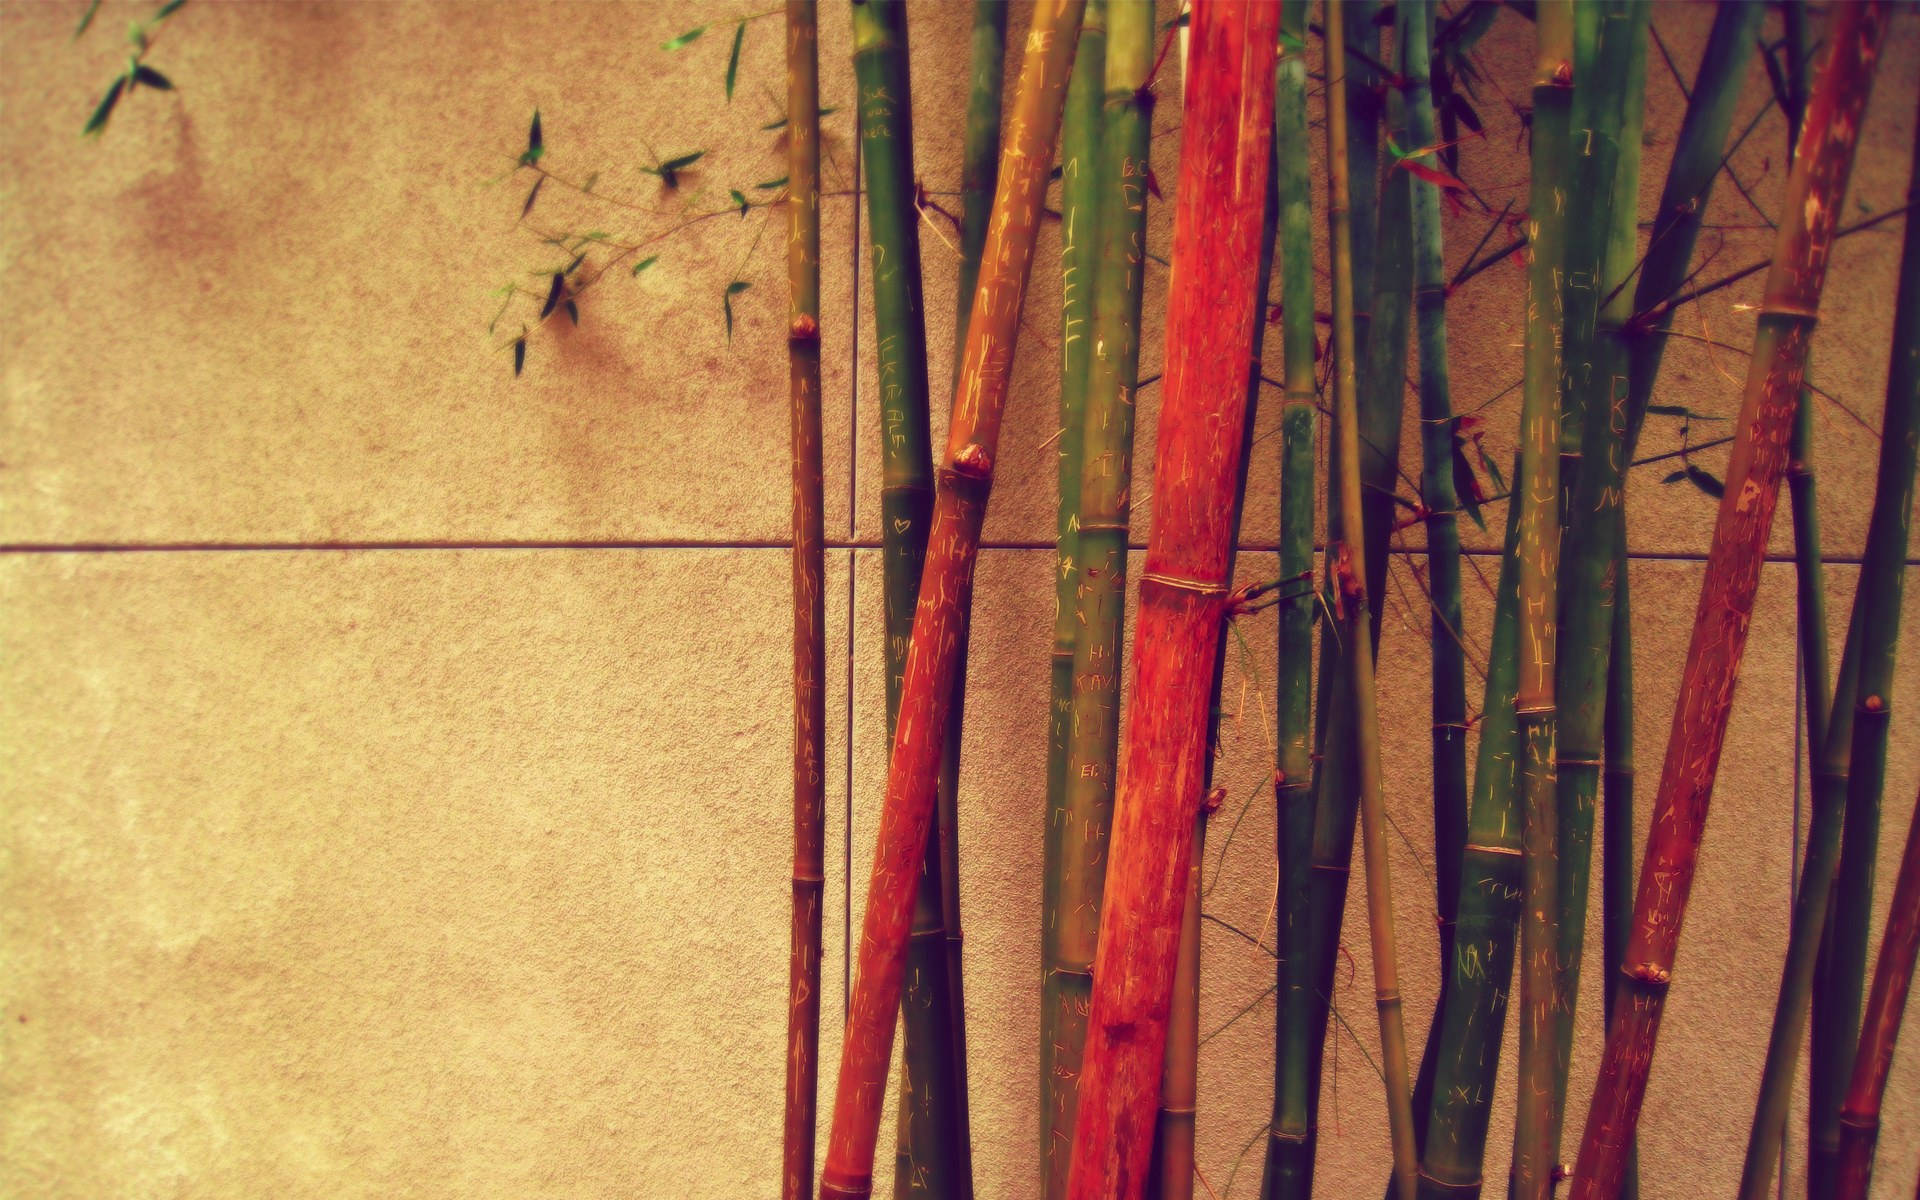 Vintage Retro Bamboo 4k Wallpaper